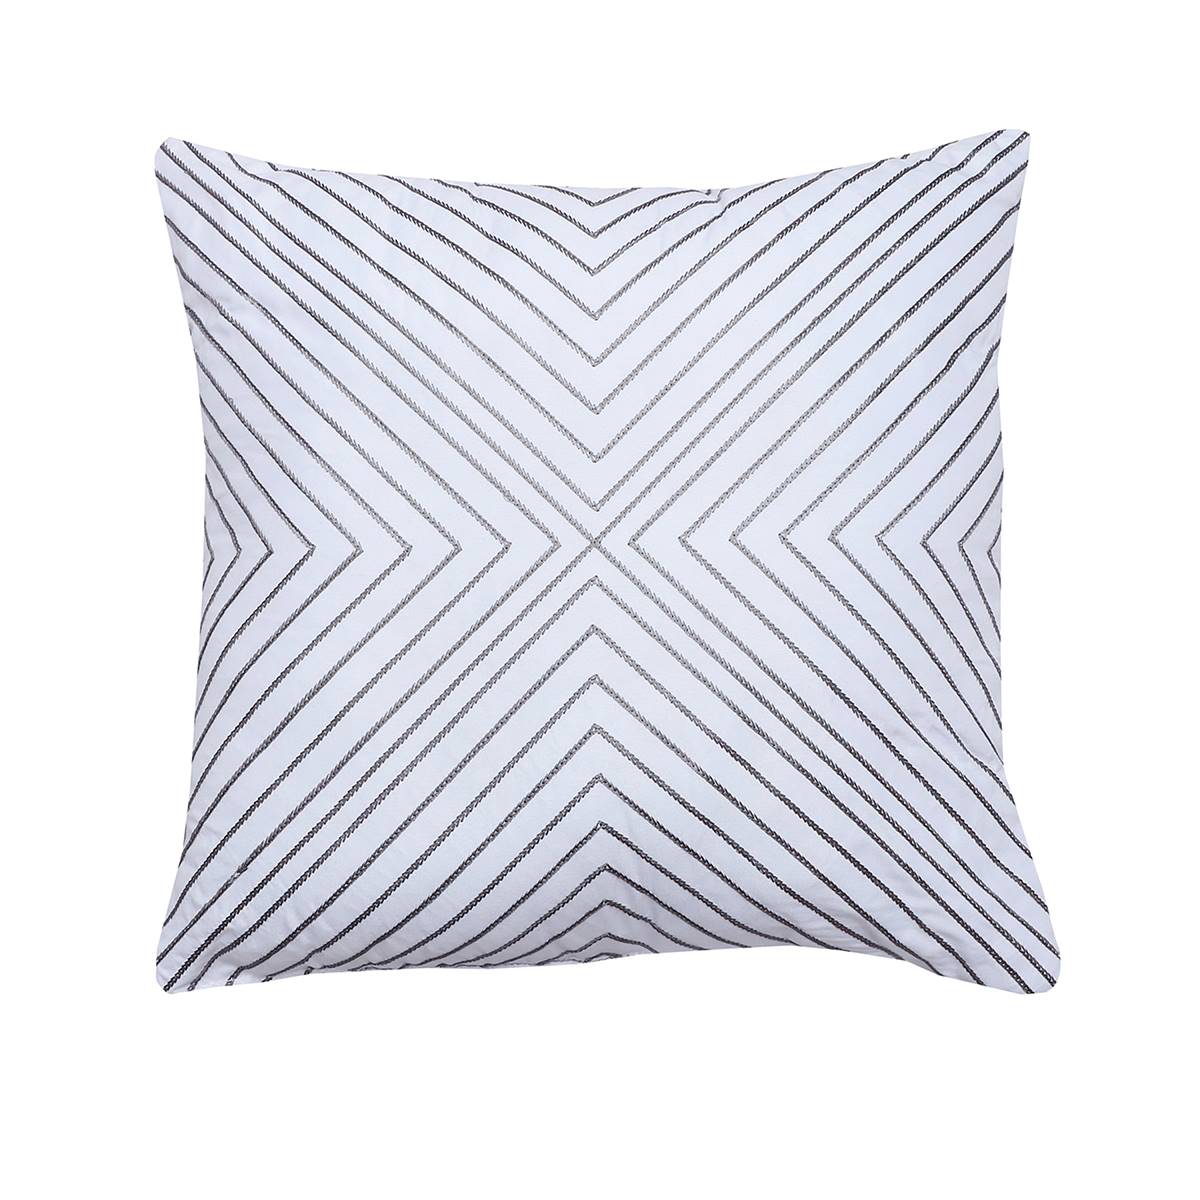 EnvioHome 100% Polyester Maze Reversible Comforter Set